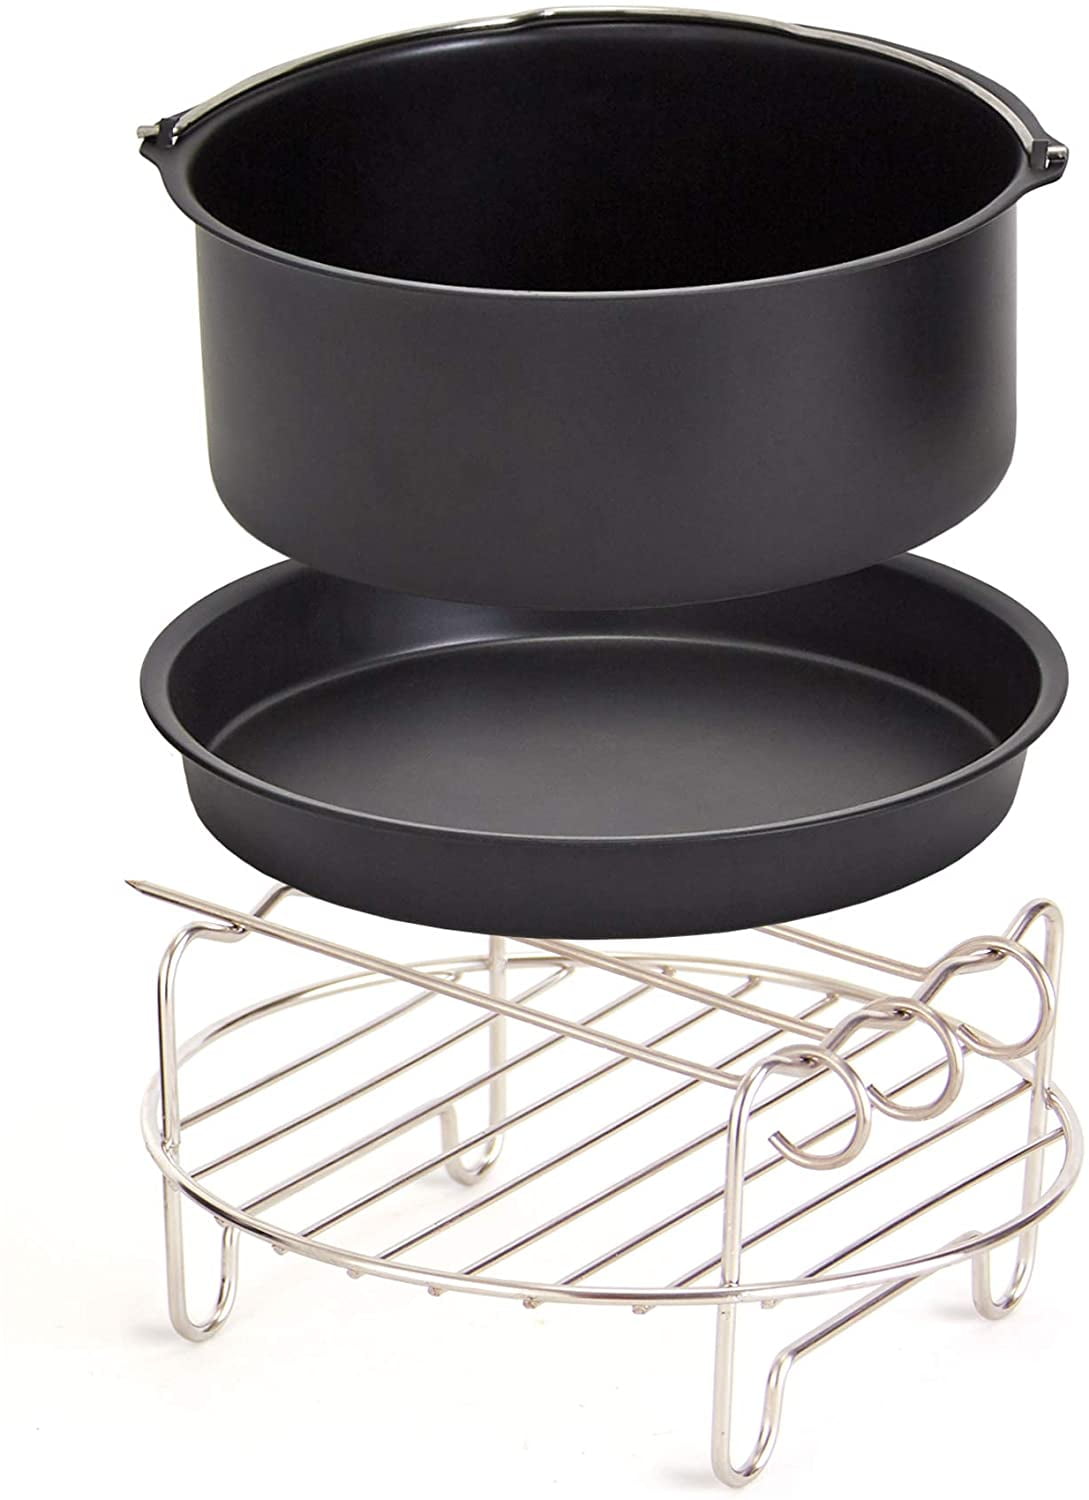 Dash 3-Piece Compact Air Fryer Accessory Kit 2 Quart Deep Dish Baking Pan